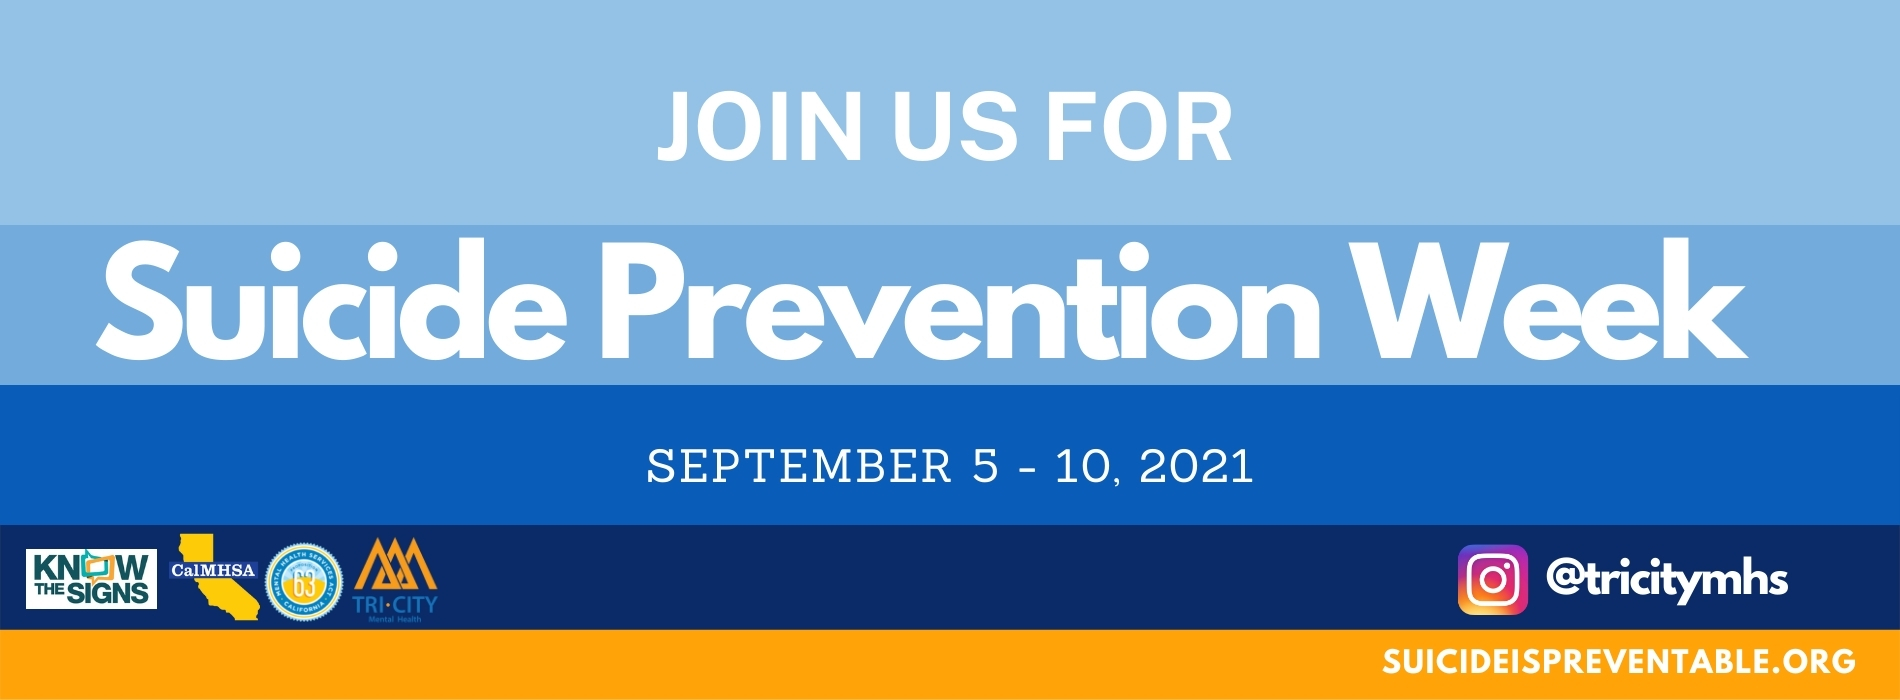 Join us for Suicide Prevention Week September 5-10, 2021